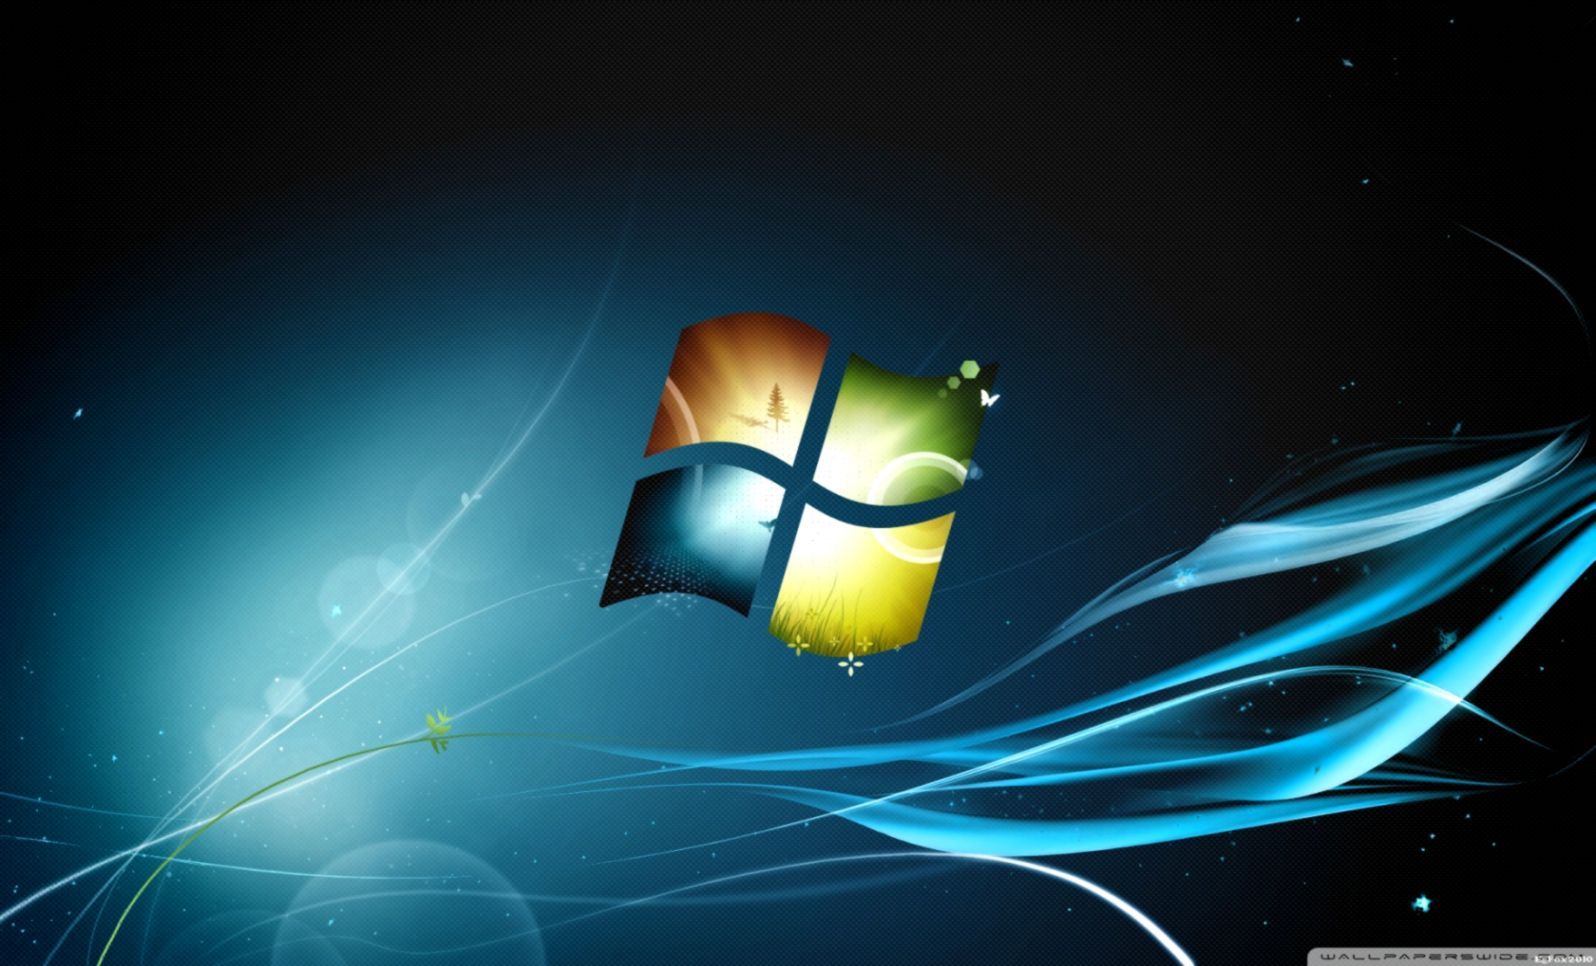 Windows 7 fondo de pantalla | Wallpapers Direct